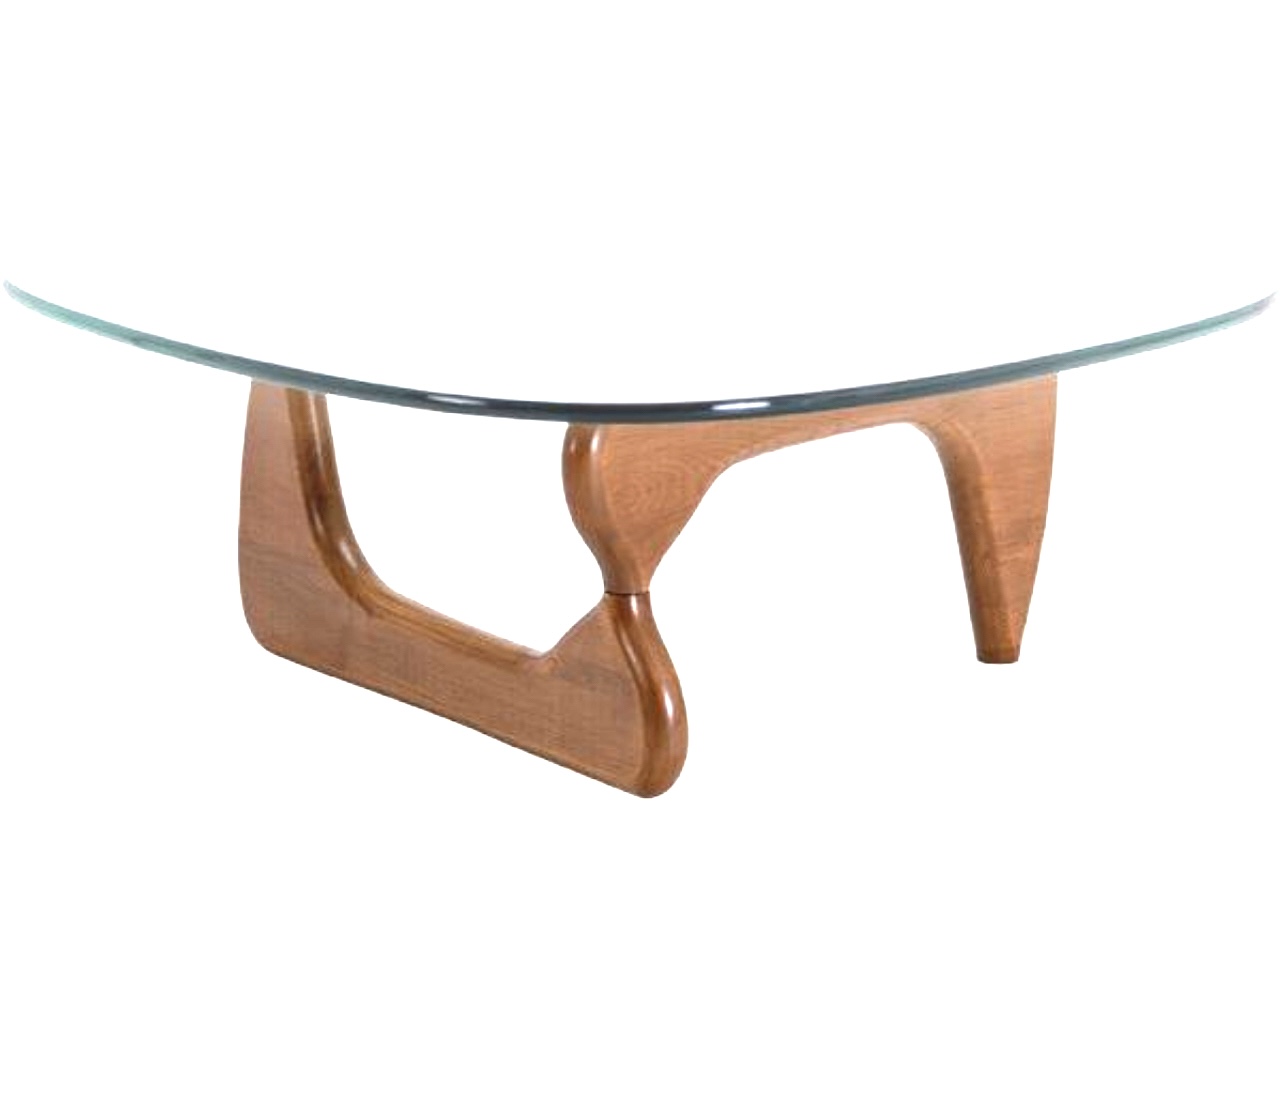 Noguchi inspired Designer mid century Notting Hill triangular coffee table 19mm glass top with Dark Walnut  ,  Light Walnut, Light Grey ,Oak , Natural or Black base  